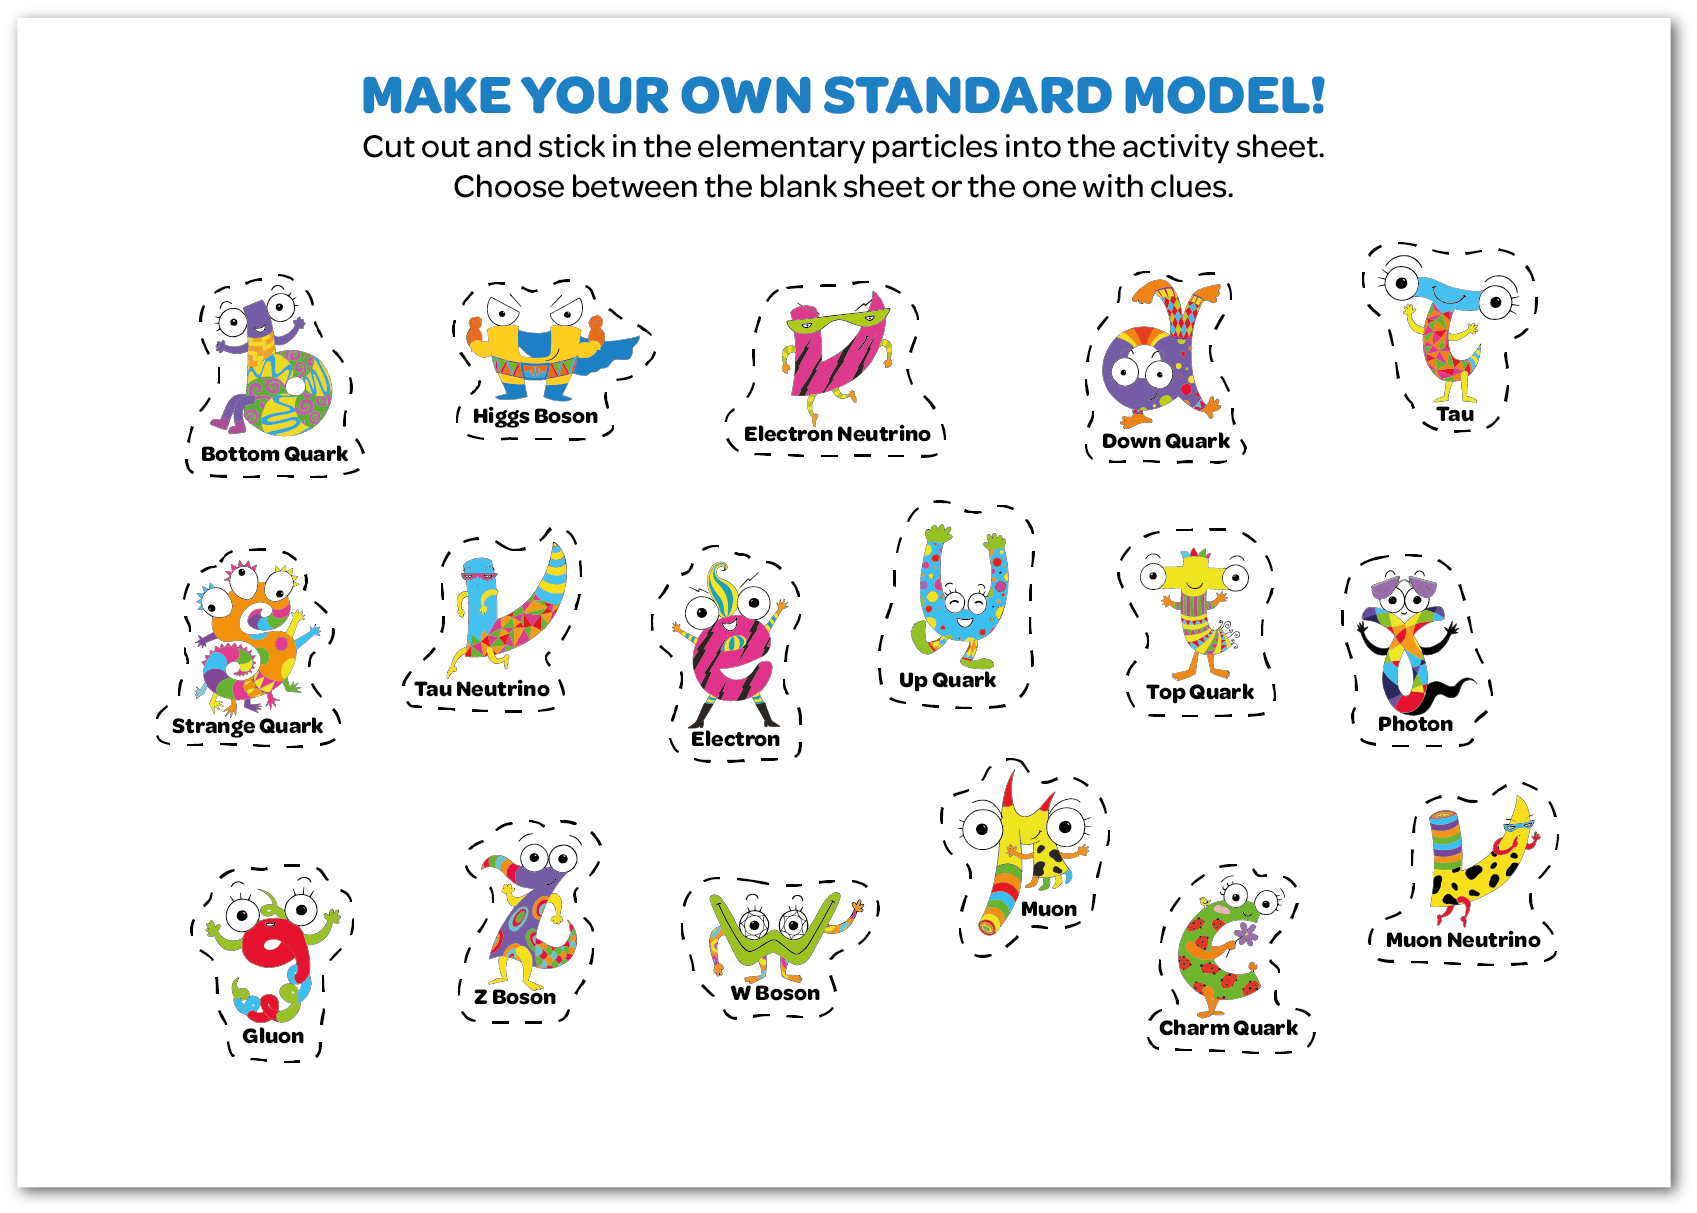 Make your own Standard Model